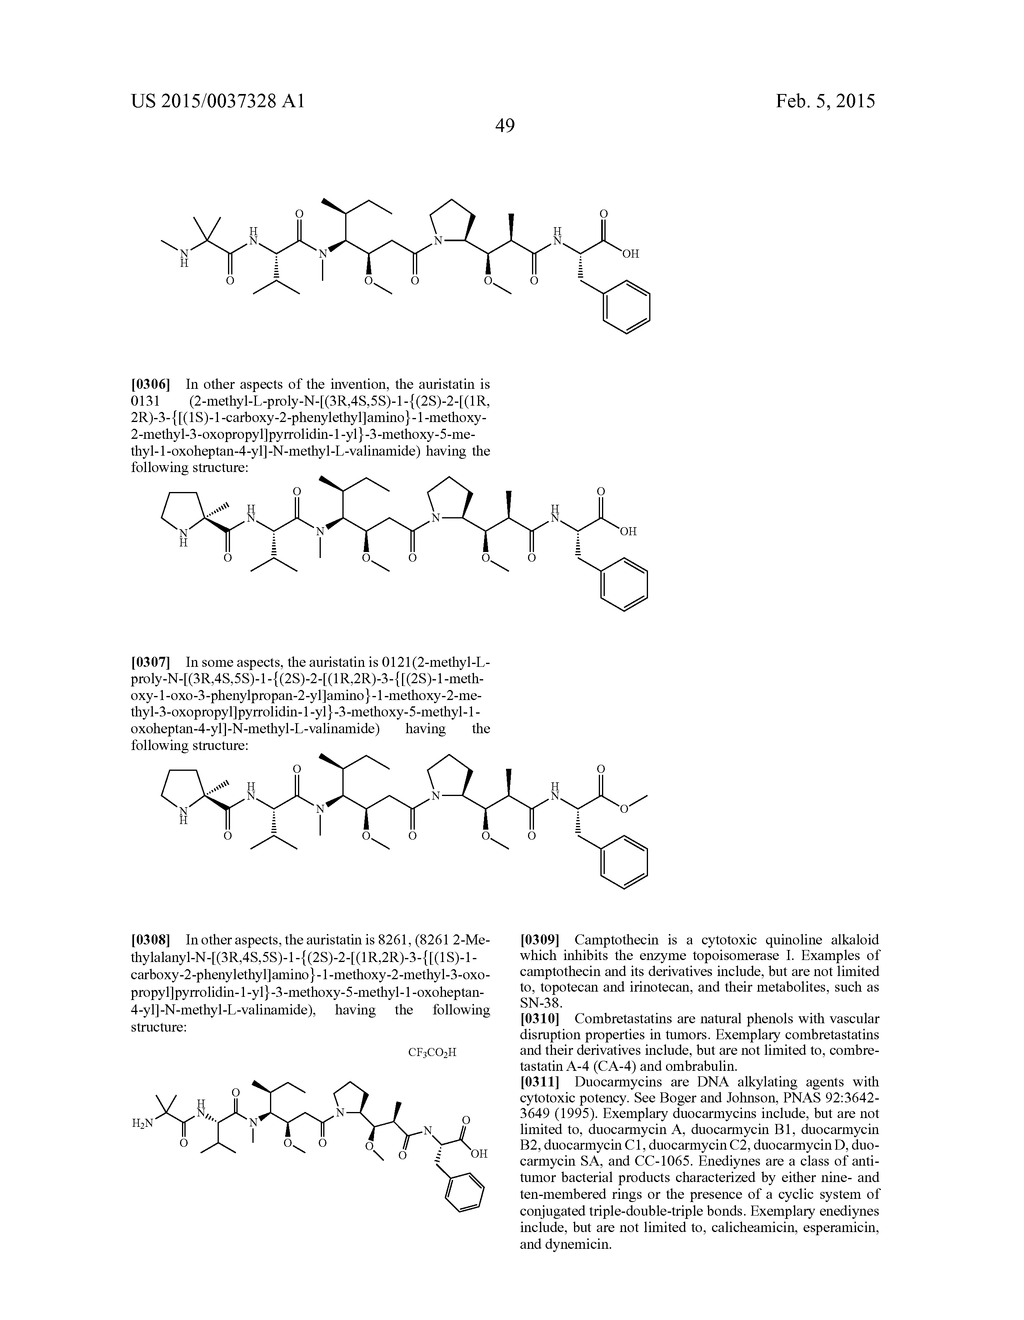 ANTI-CXCR4 ANTIBODIES AND ANTIBODY-DRUG CONJUGATES - diagram, schematic, and image 66